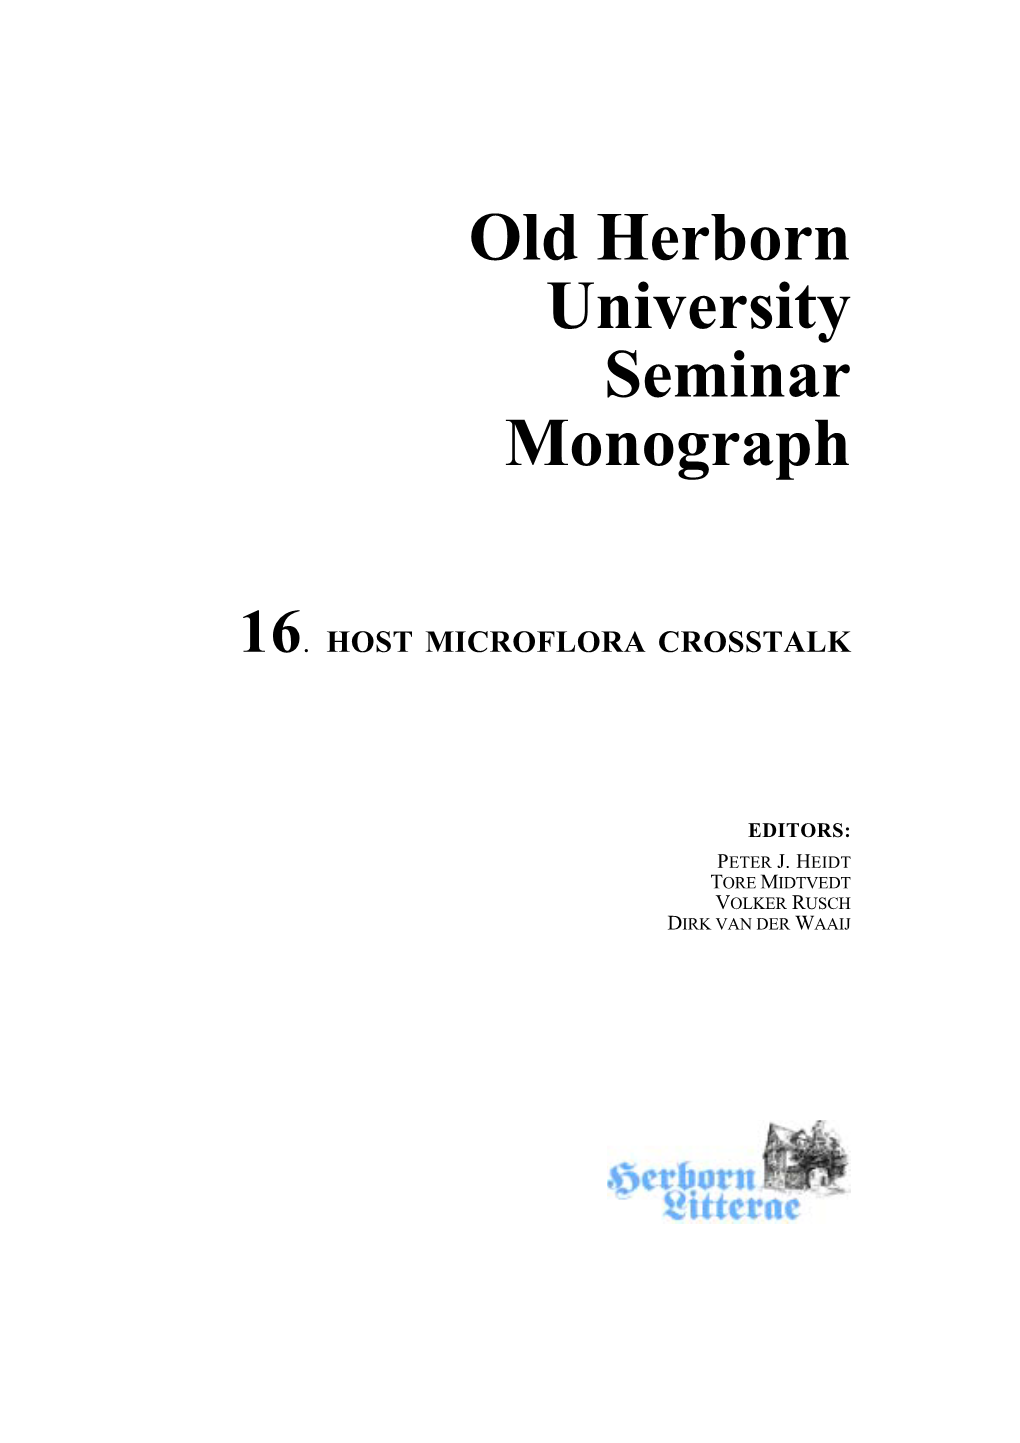 Old Herborn University Monograph 16